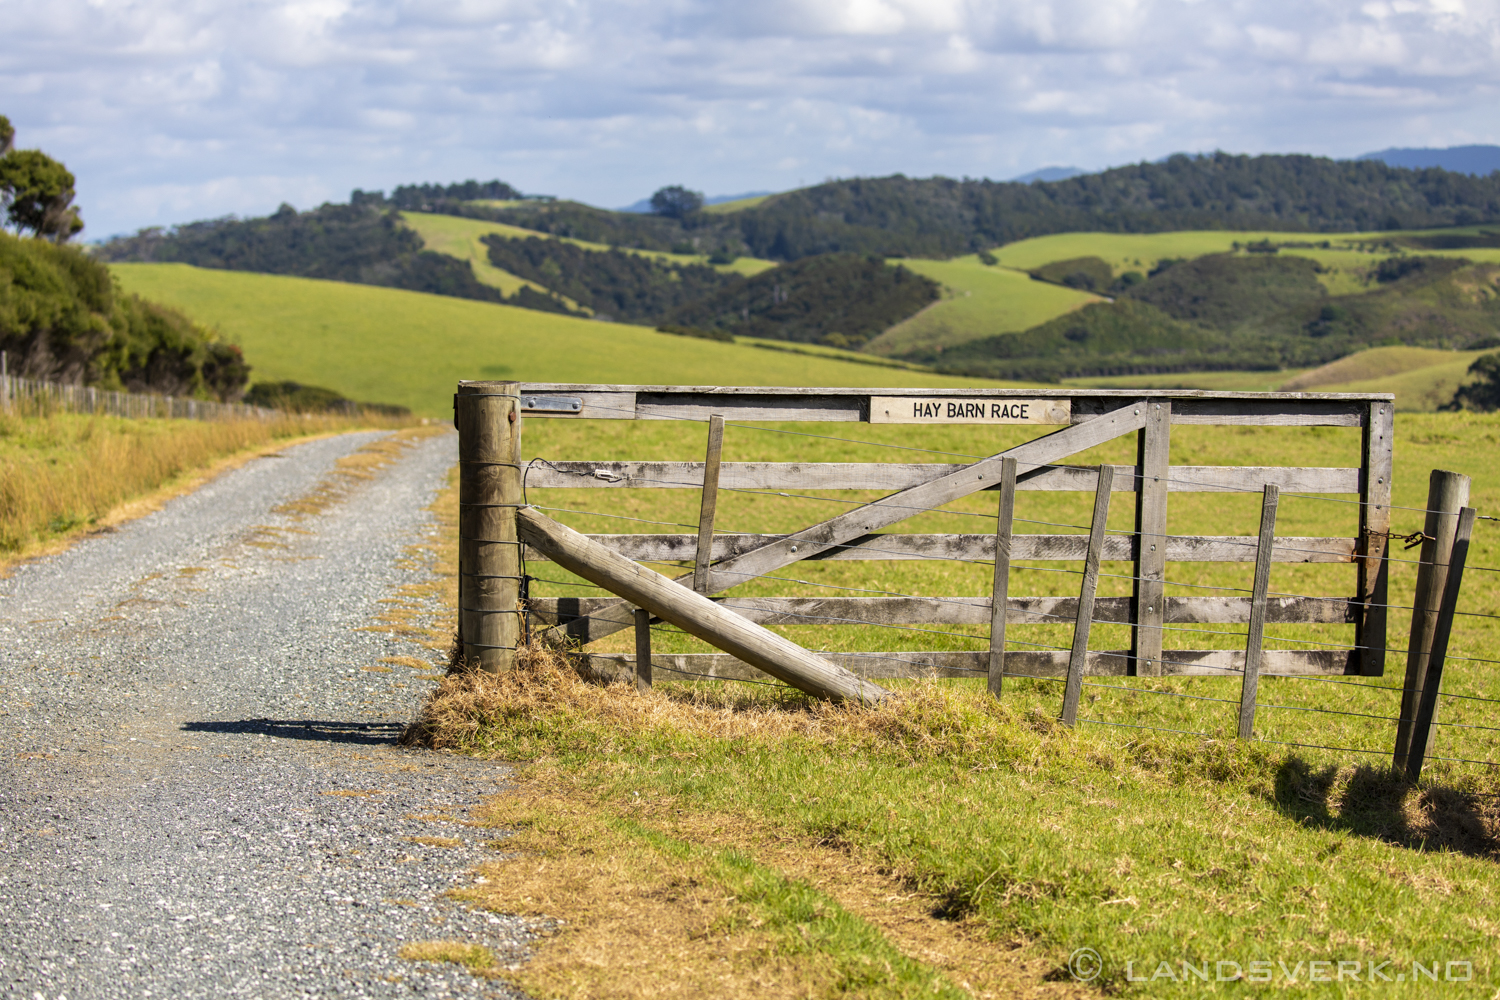 Tawharanui Regional Park, New Zealand.

(Canon EOS 5D Mark IV / Canon EF 100-400mm f/4.5-5.6 L IS II USM)